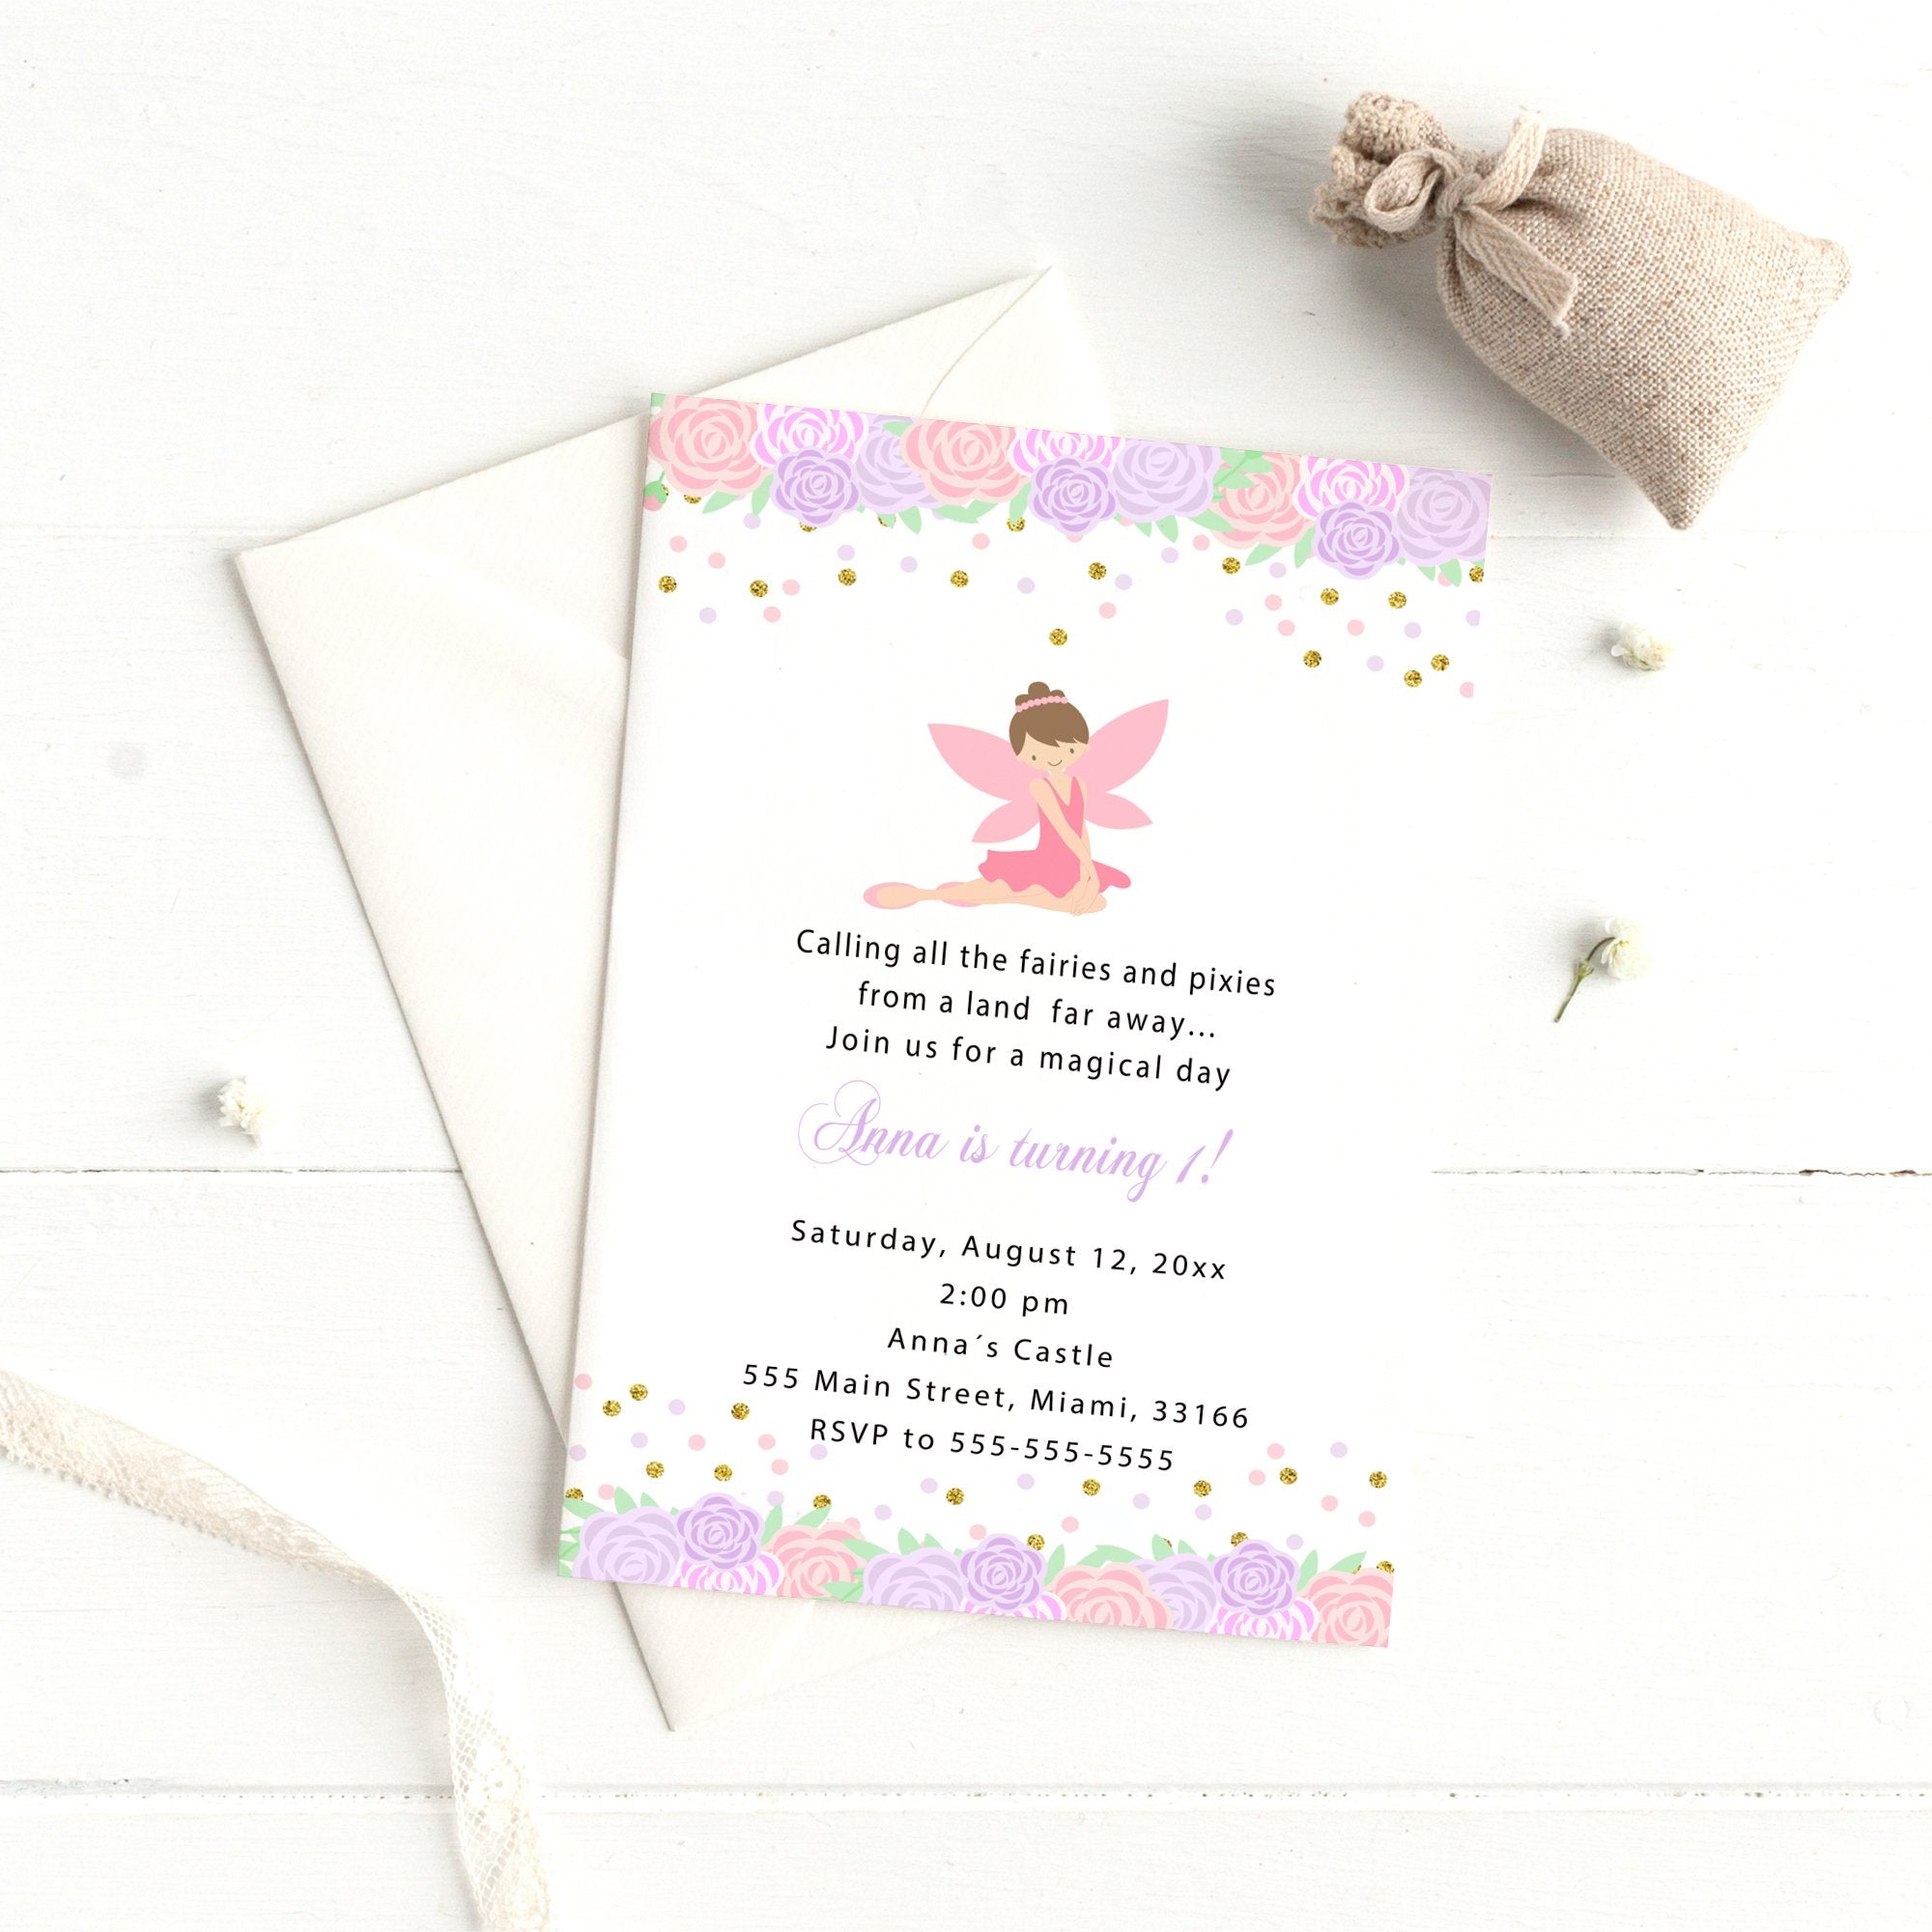 Fairy invitations pink purple floral (set of 30)